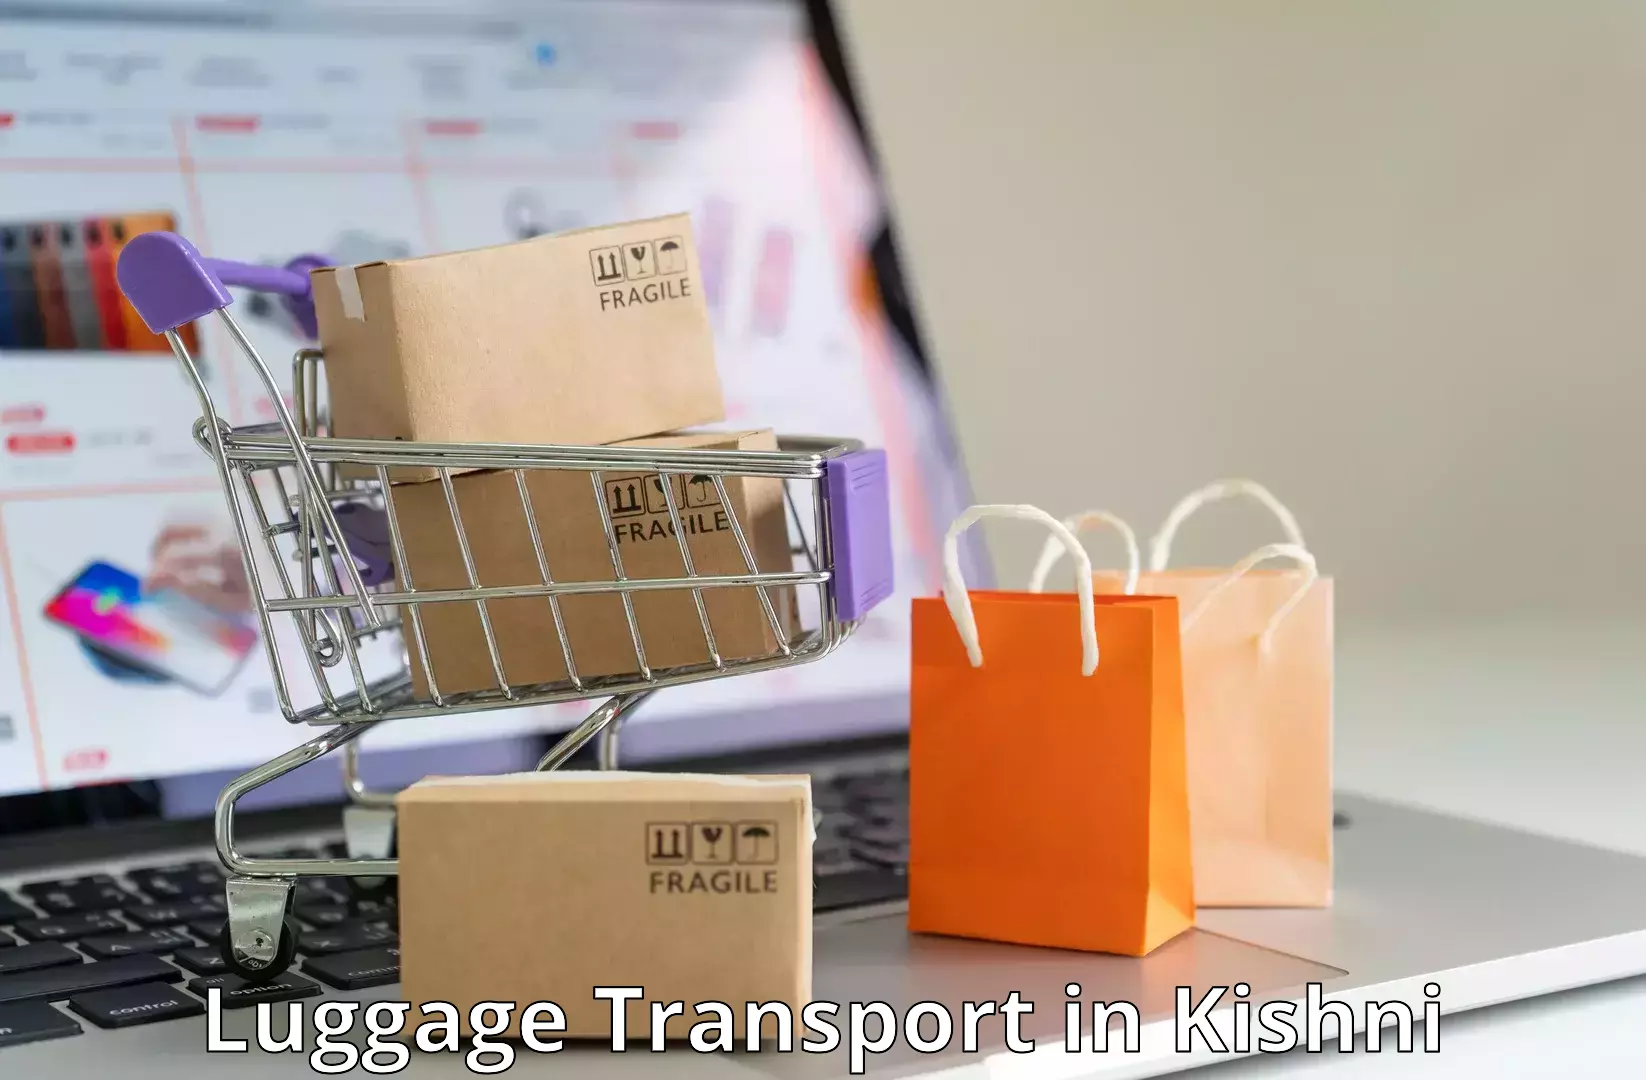 Doorstep luggage collection in Kishni